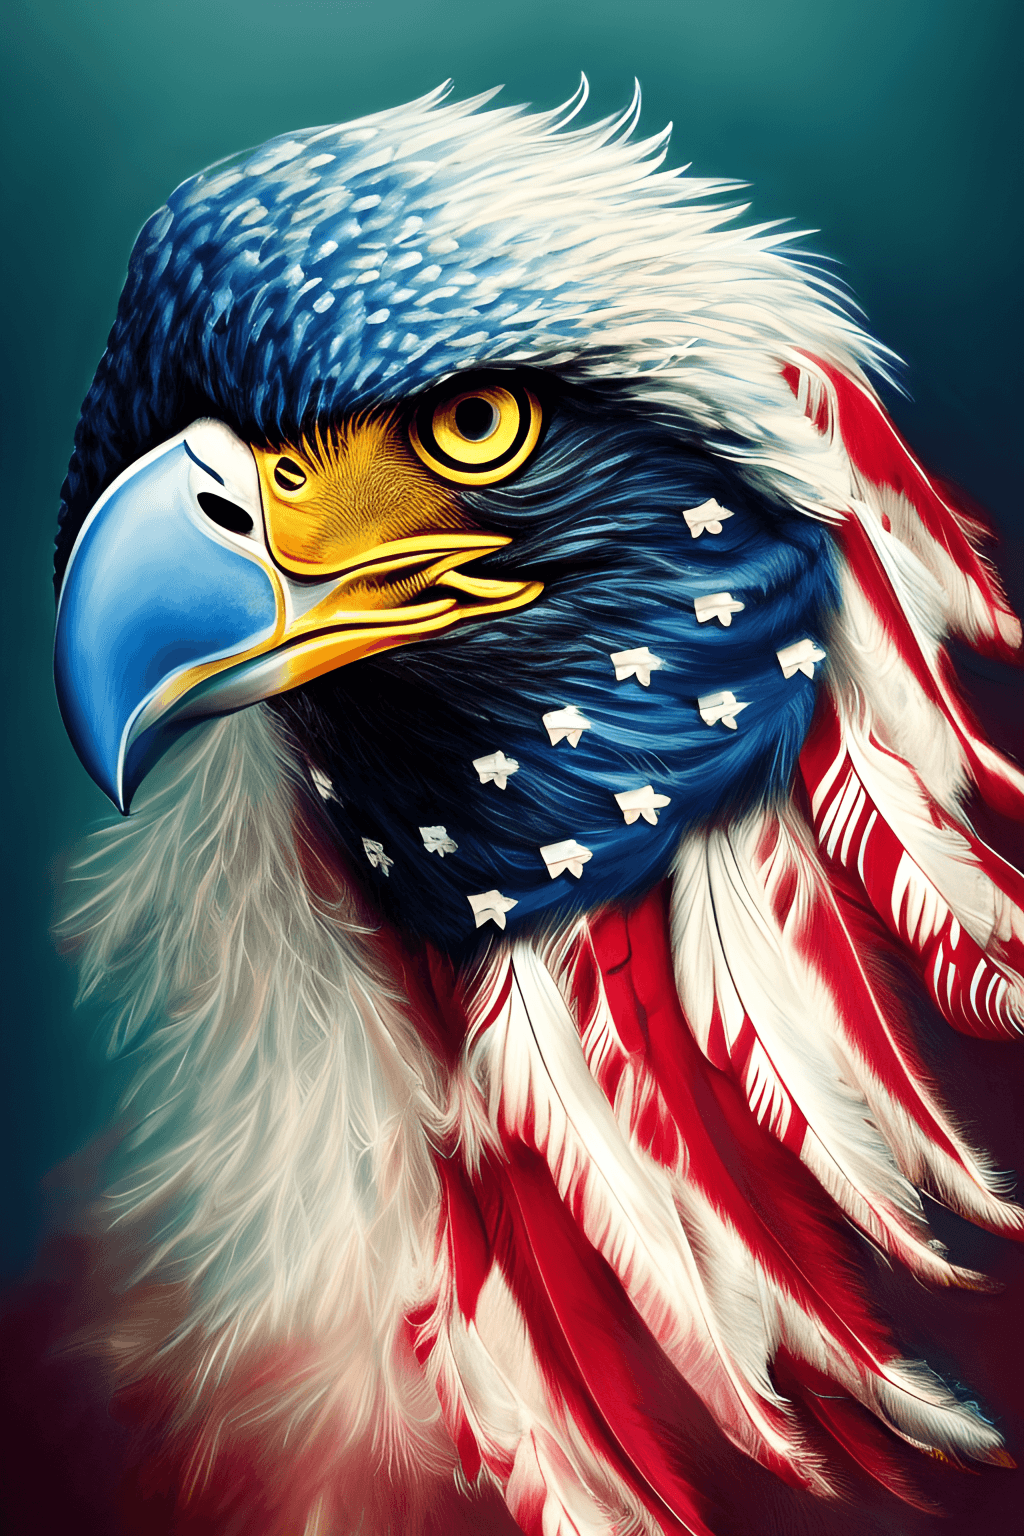  Adler Hintergrundbild 1024x1536. Ross Tran Adler Grafik Mit Amerikanischer Flagge · Creative Fabrica